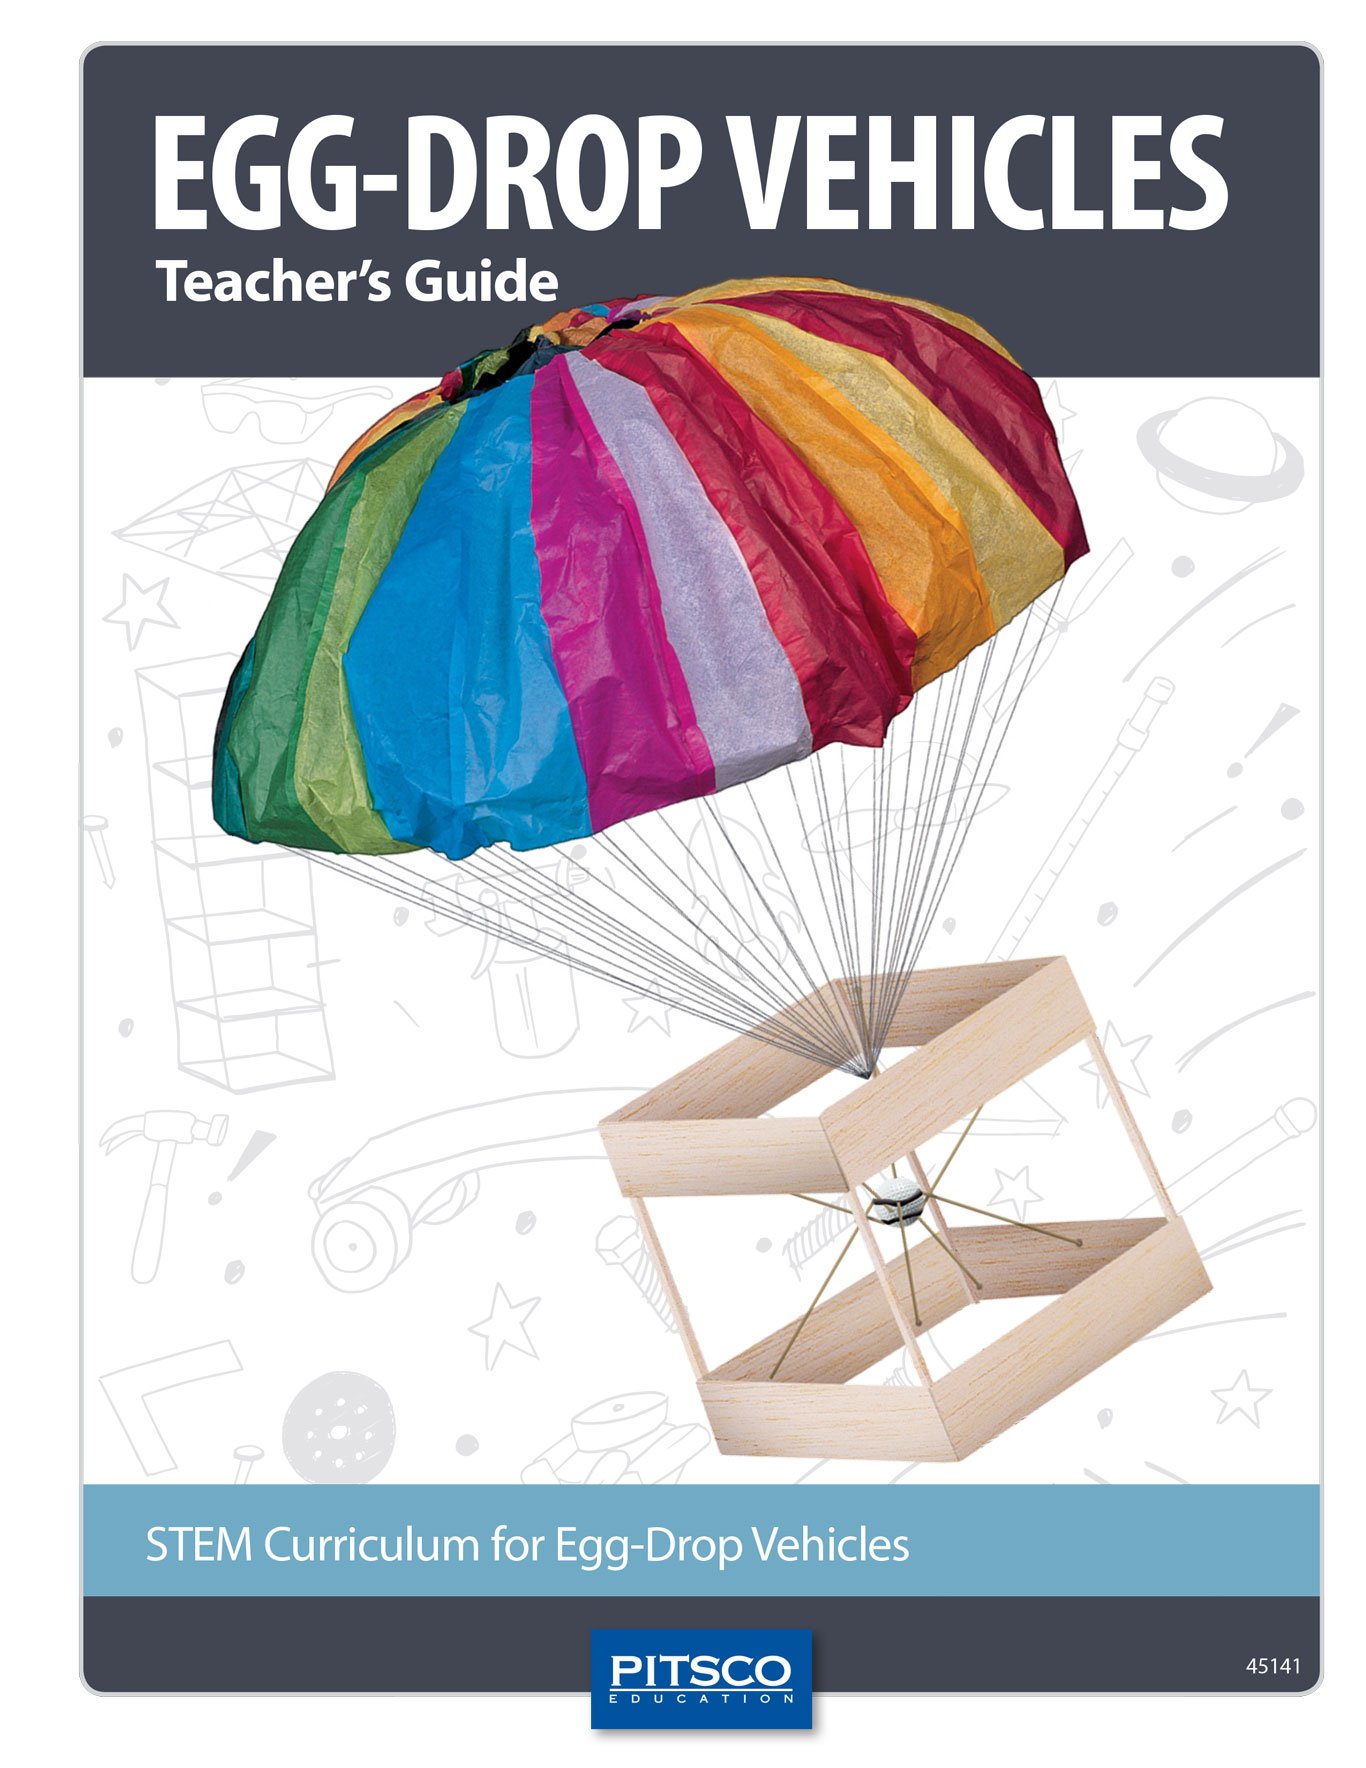 Egg-Drop-Vechicles-Teachers-Guide-1366-0119